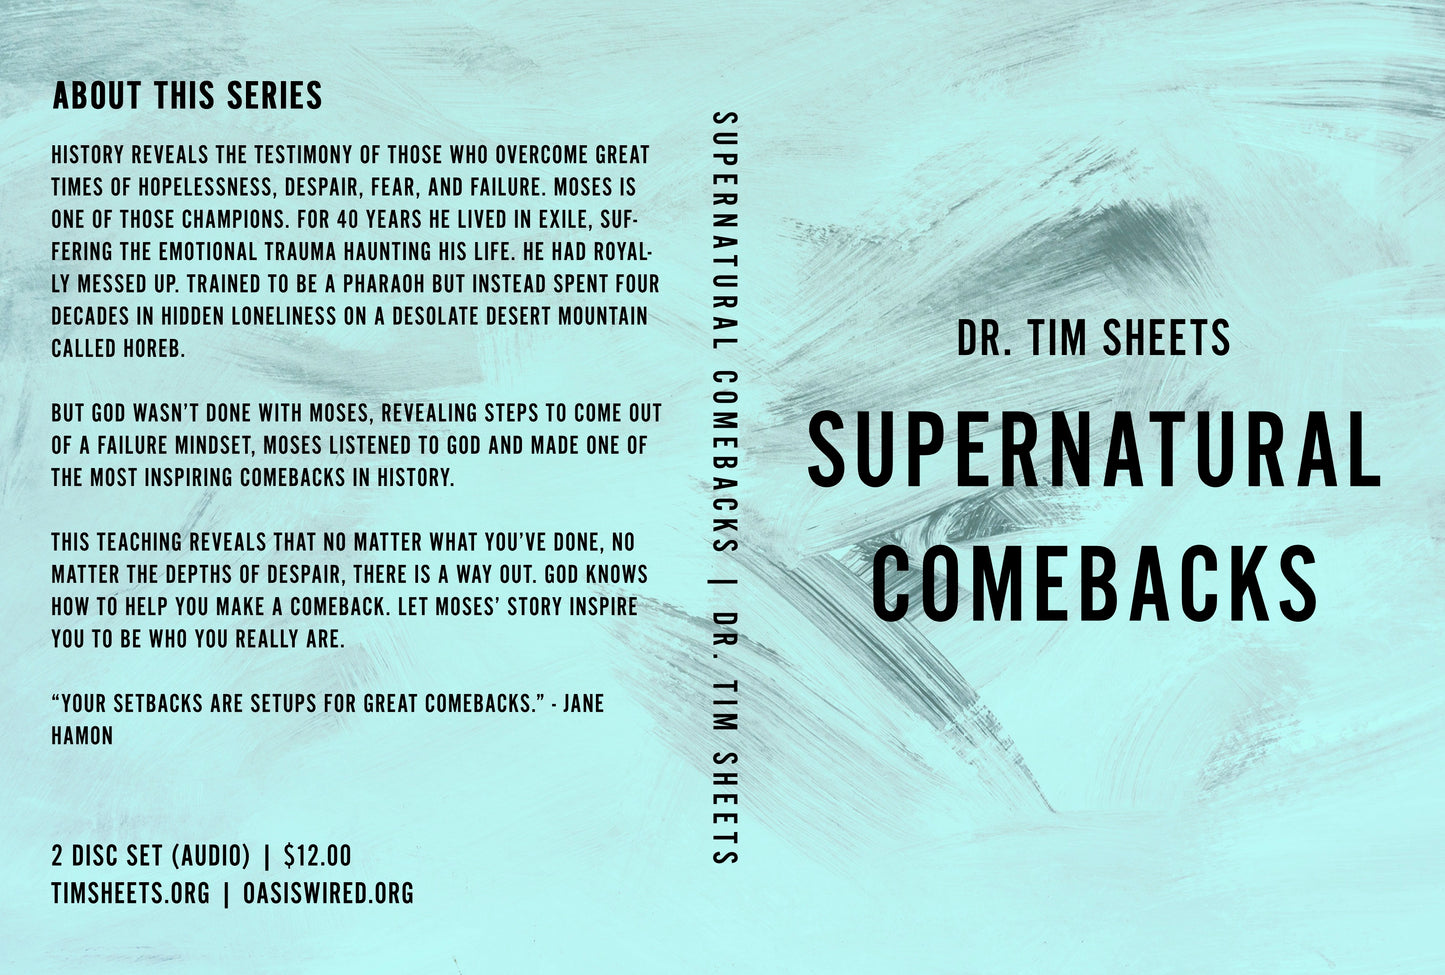 Supernatural Comebacks [MP3 Digital Download]